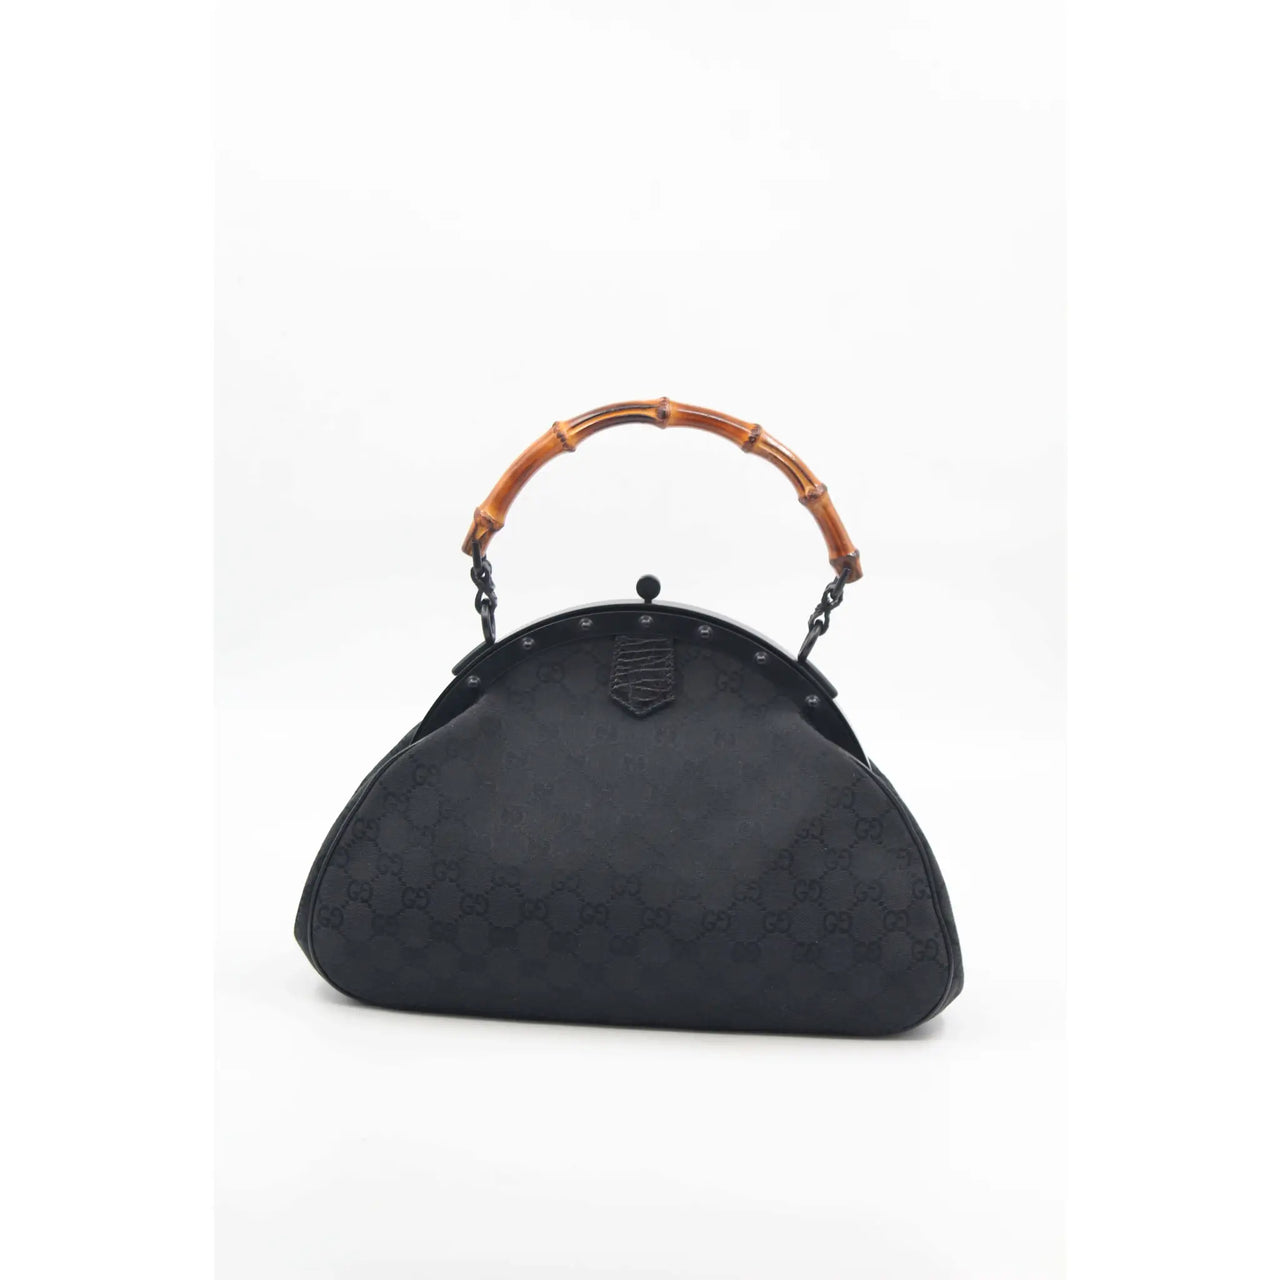 Gucci Bamboo Handbag 339002 Women's Leather Handbag Brown